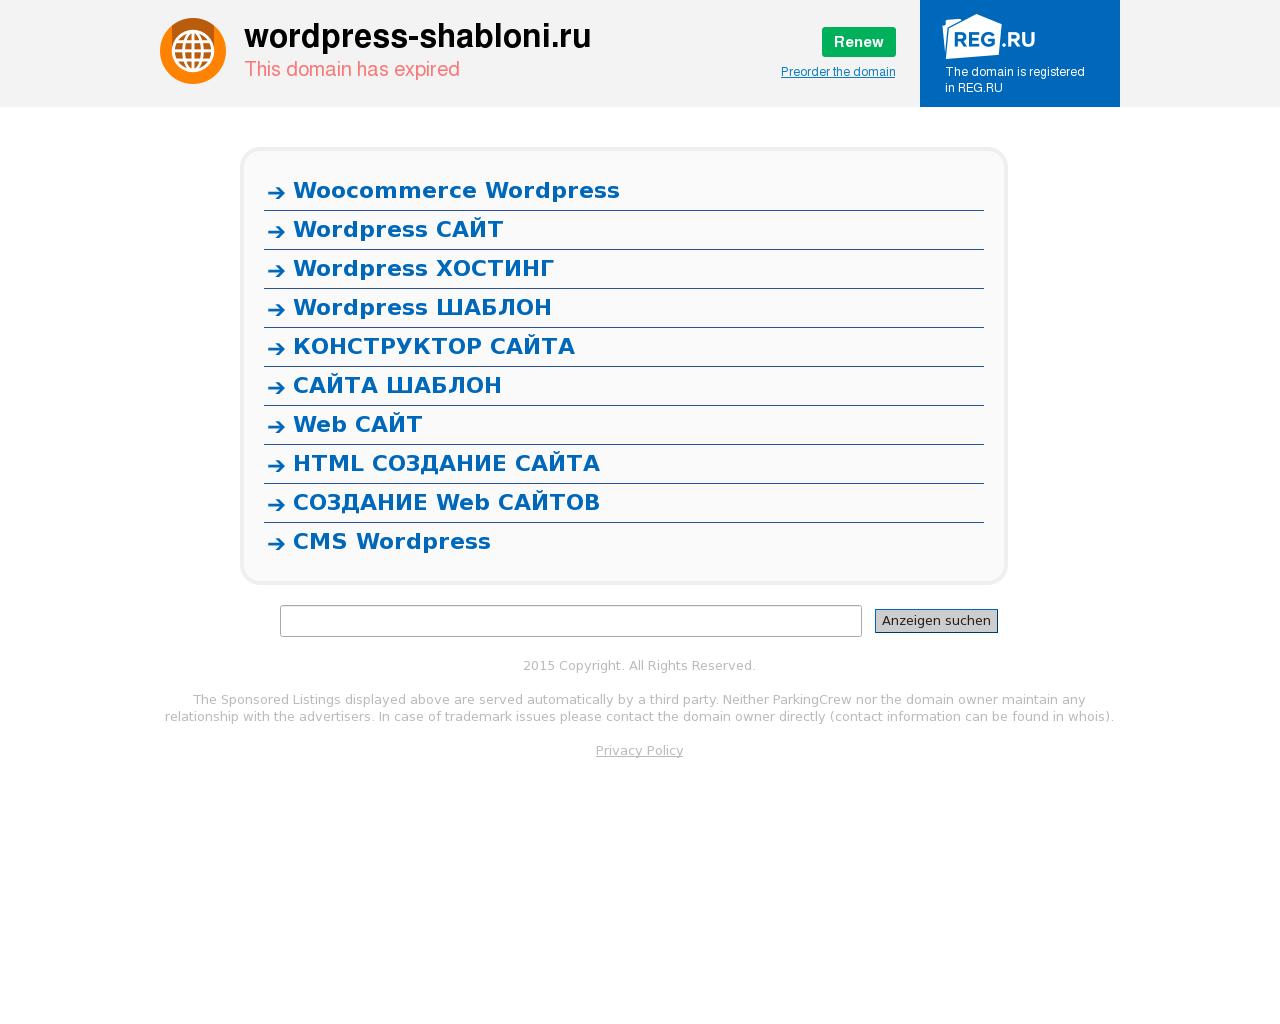 Изображение сайта wordpress-shabloni.ru в разрешении 1280x1024